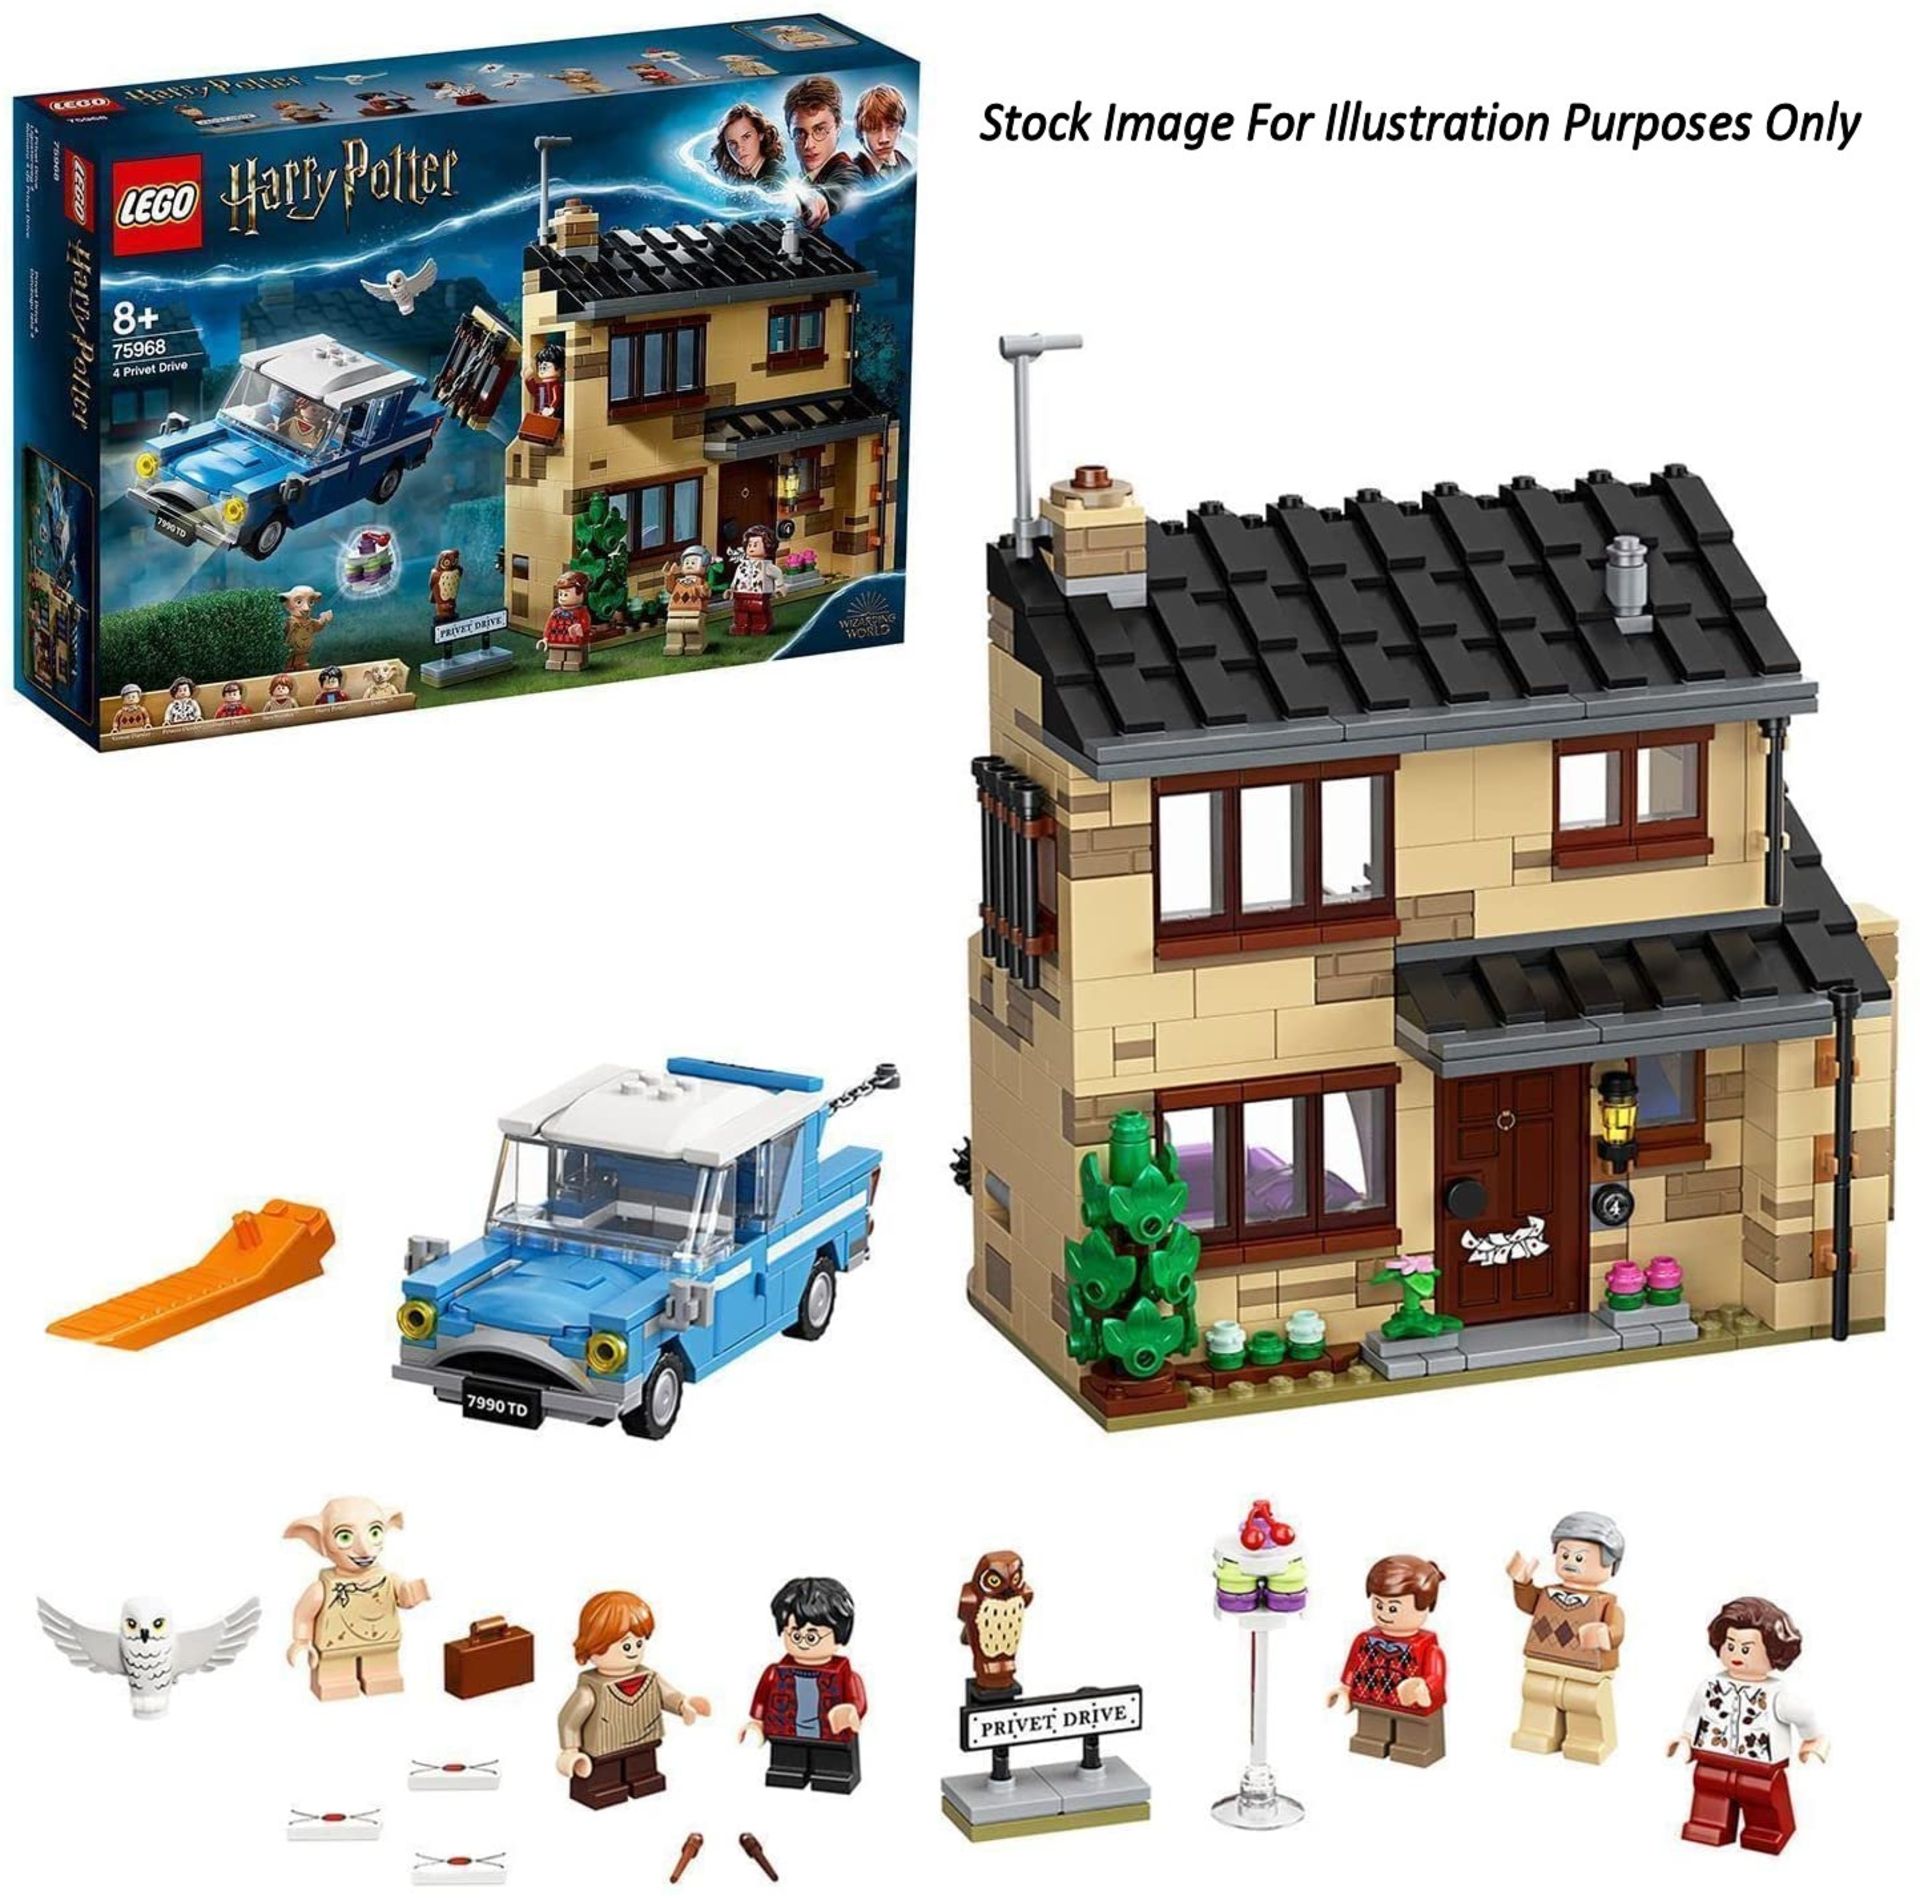 1 x Lego Harry Potter 4 Privet Drive - Set # 75968 - New/Boxed